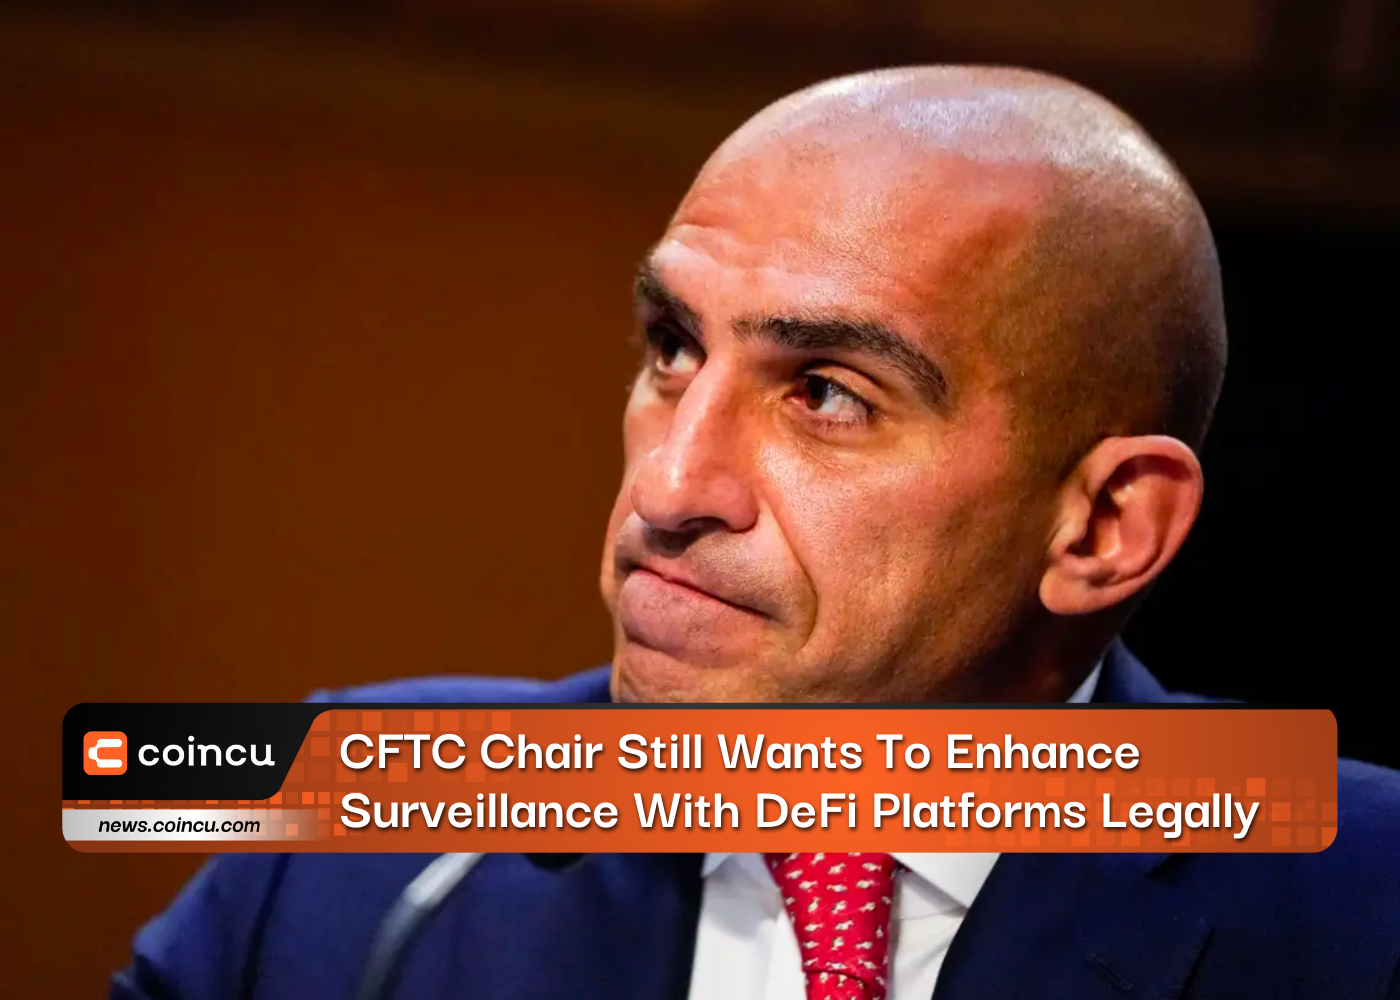 CFTC Chair Still Wants To Enhance Surveillance With DeFi Platforms Legally